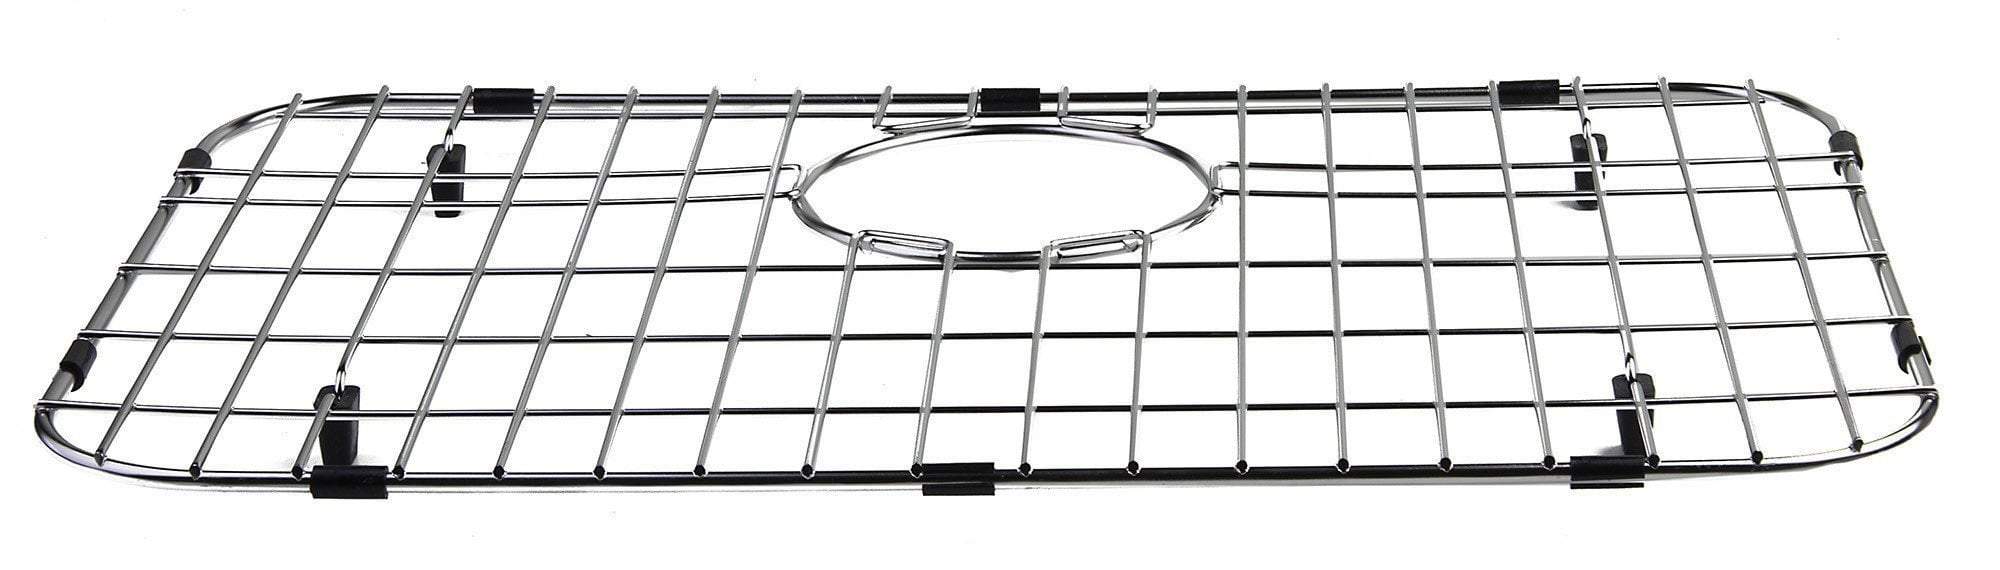 alfi solid stainless steel kitchen sink grid gr503